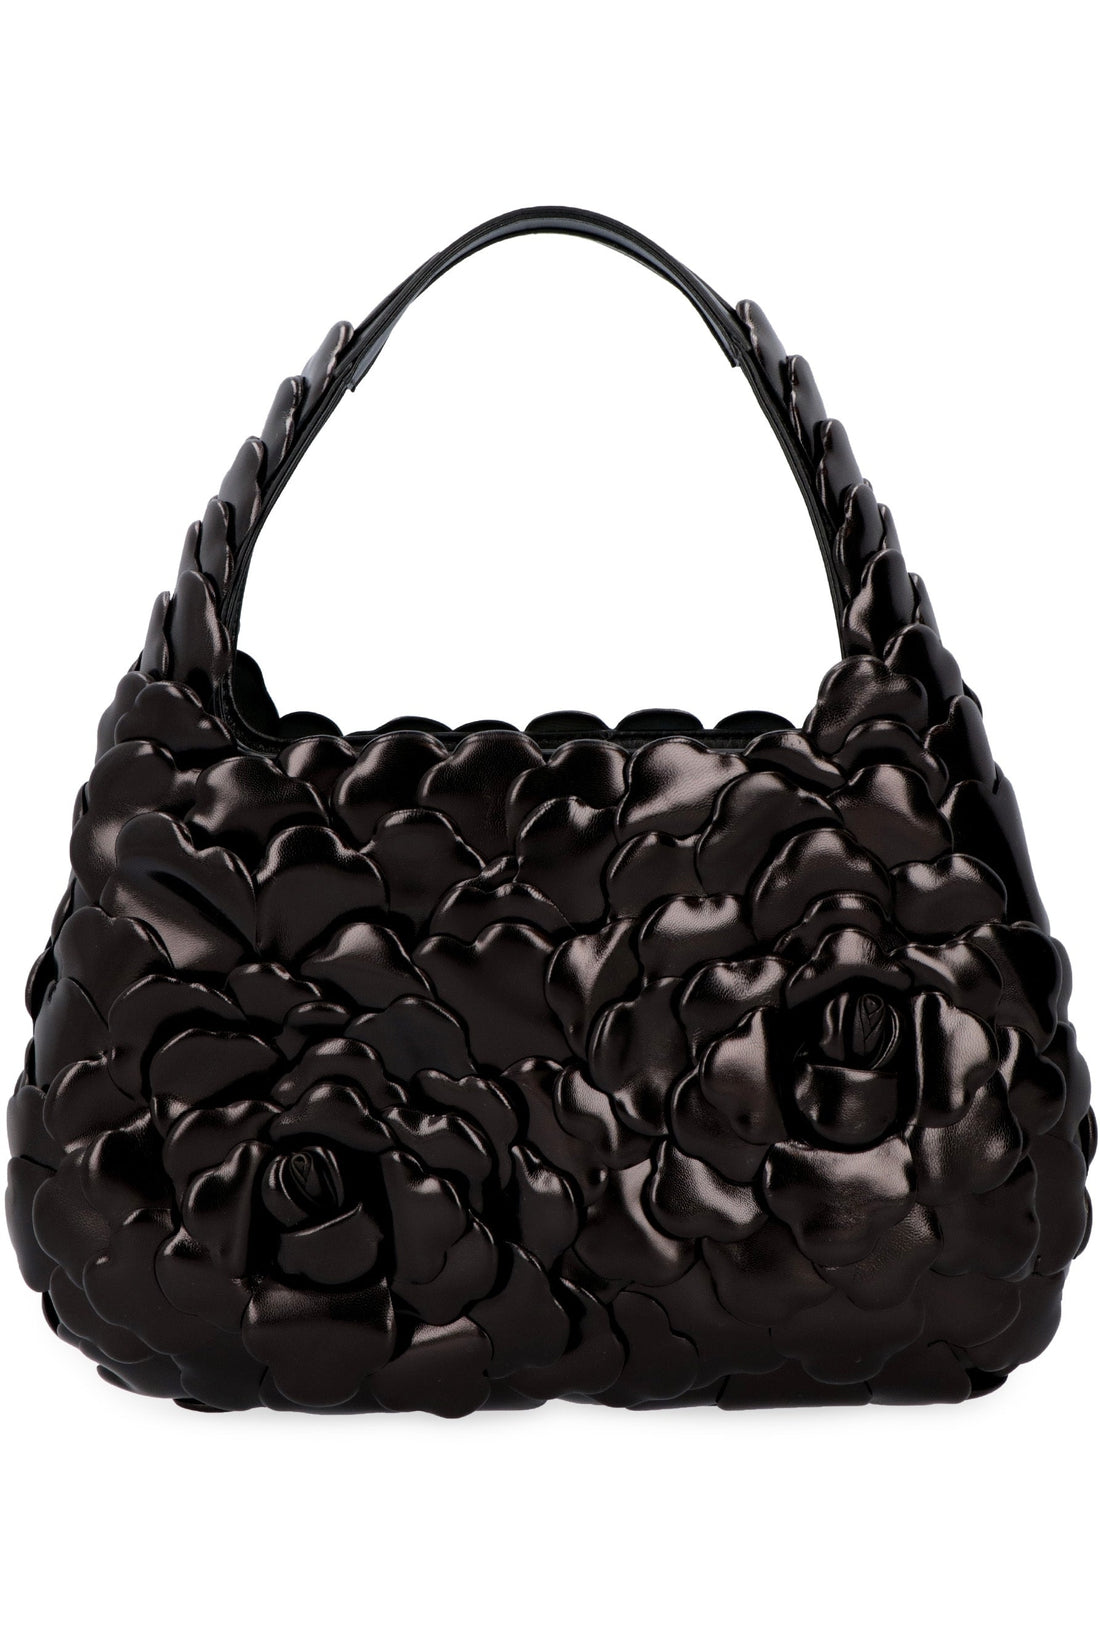 Valentino-OUTLET-SALE-Hobo leather small bag - Atelier Bag Valentino Garavani 03 Rose Edition-ARCHIVIST